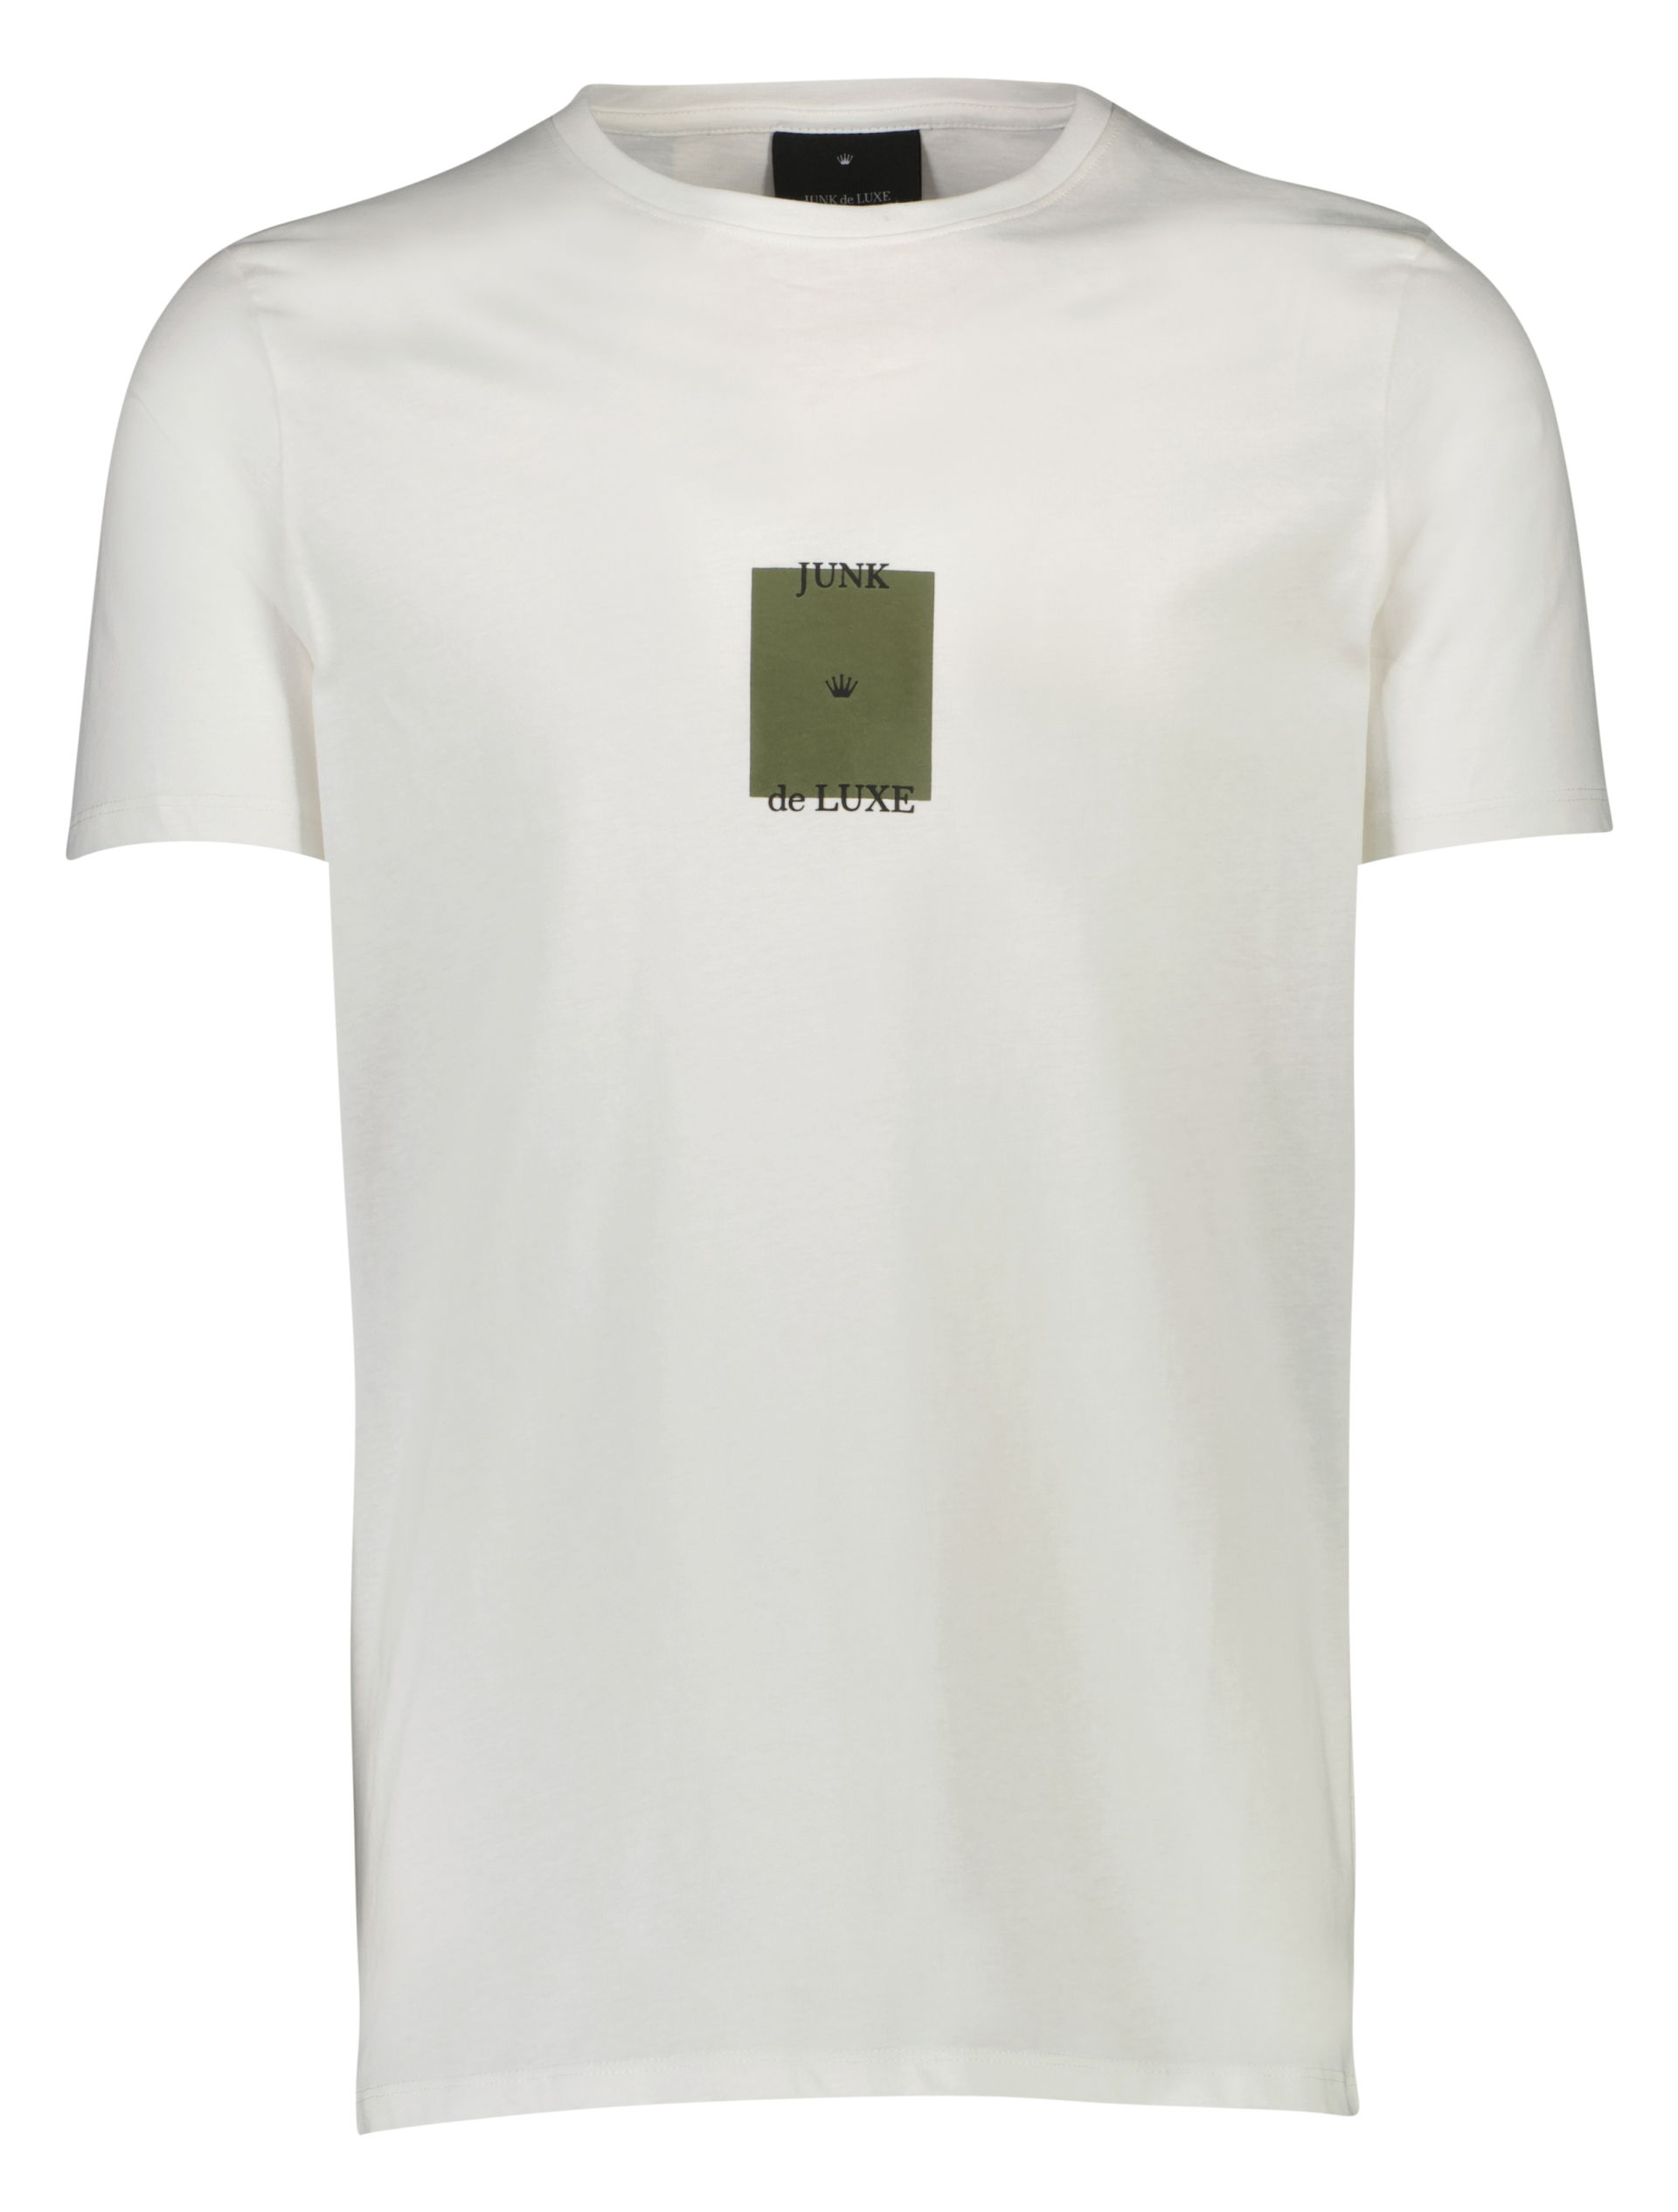 Junk de Luxe T-shirt hvid / off white